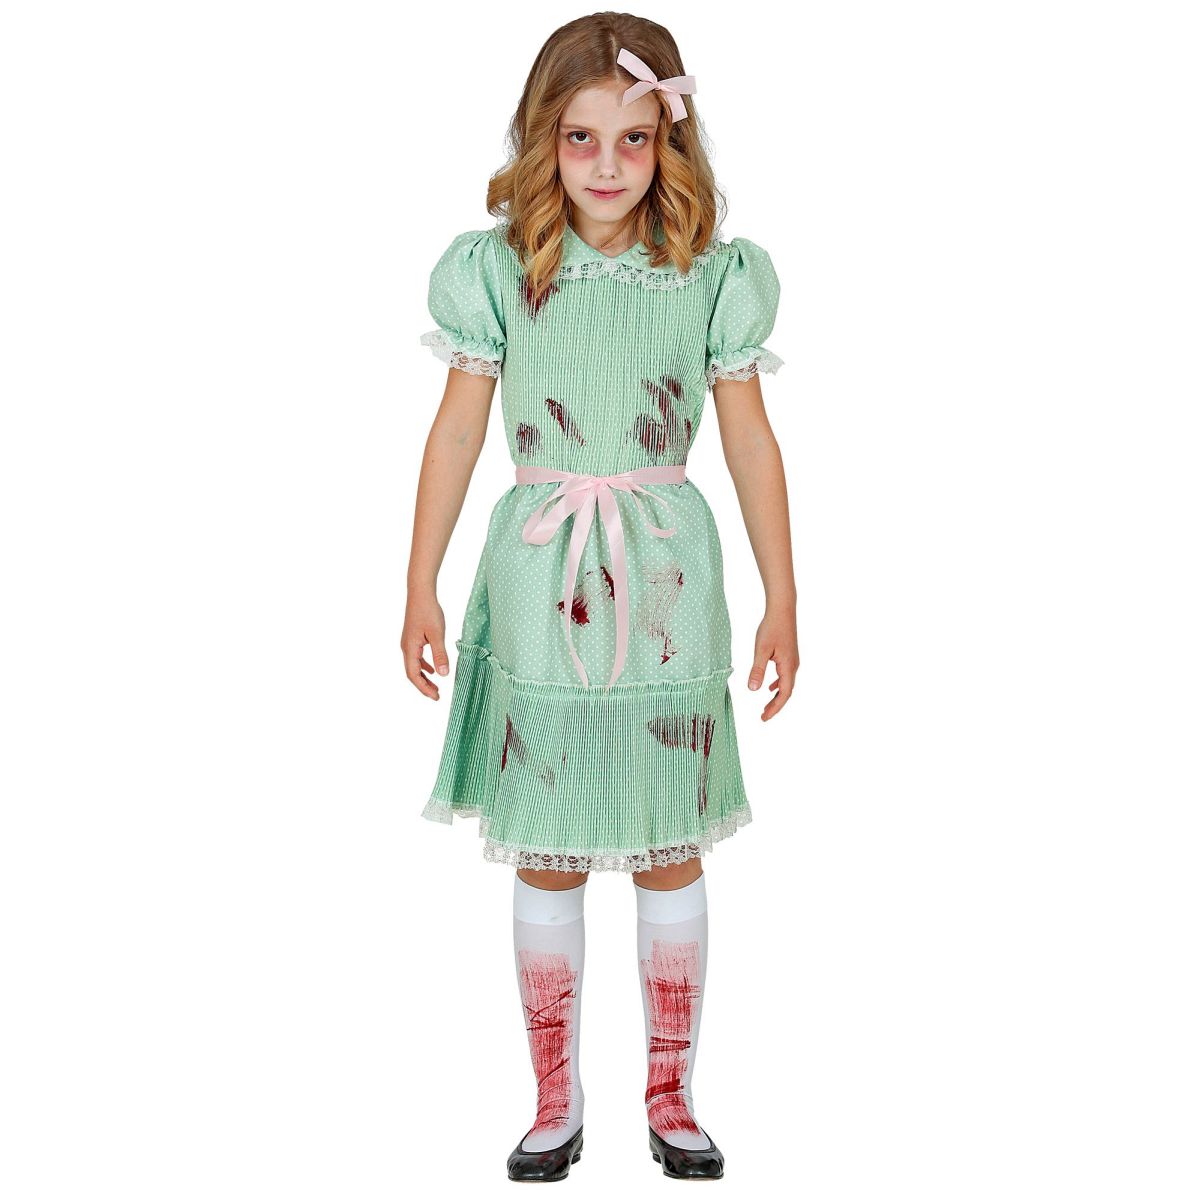 Killerpuppe Kinderkostüm Halloween Kleid, Gürtel, Strümpfe